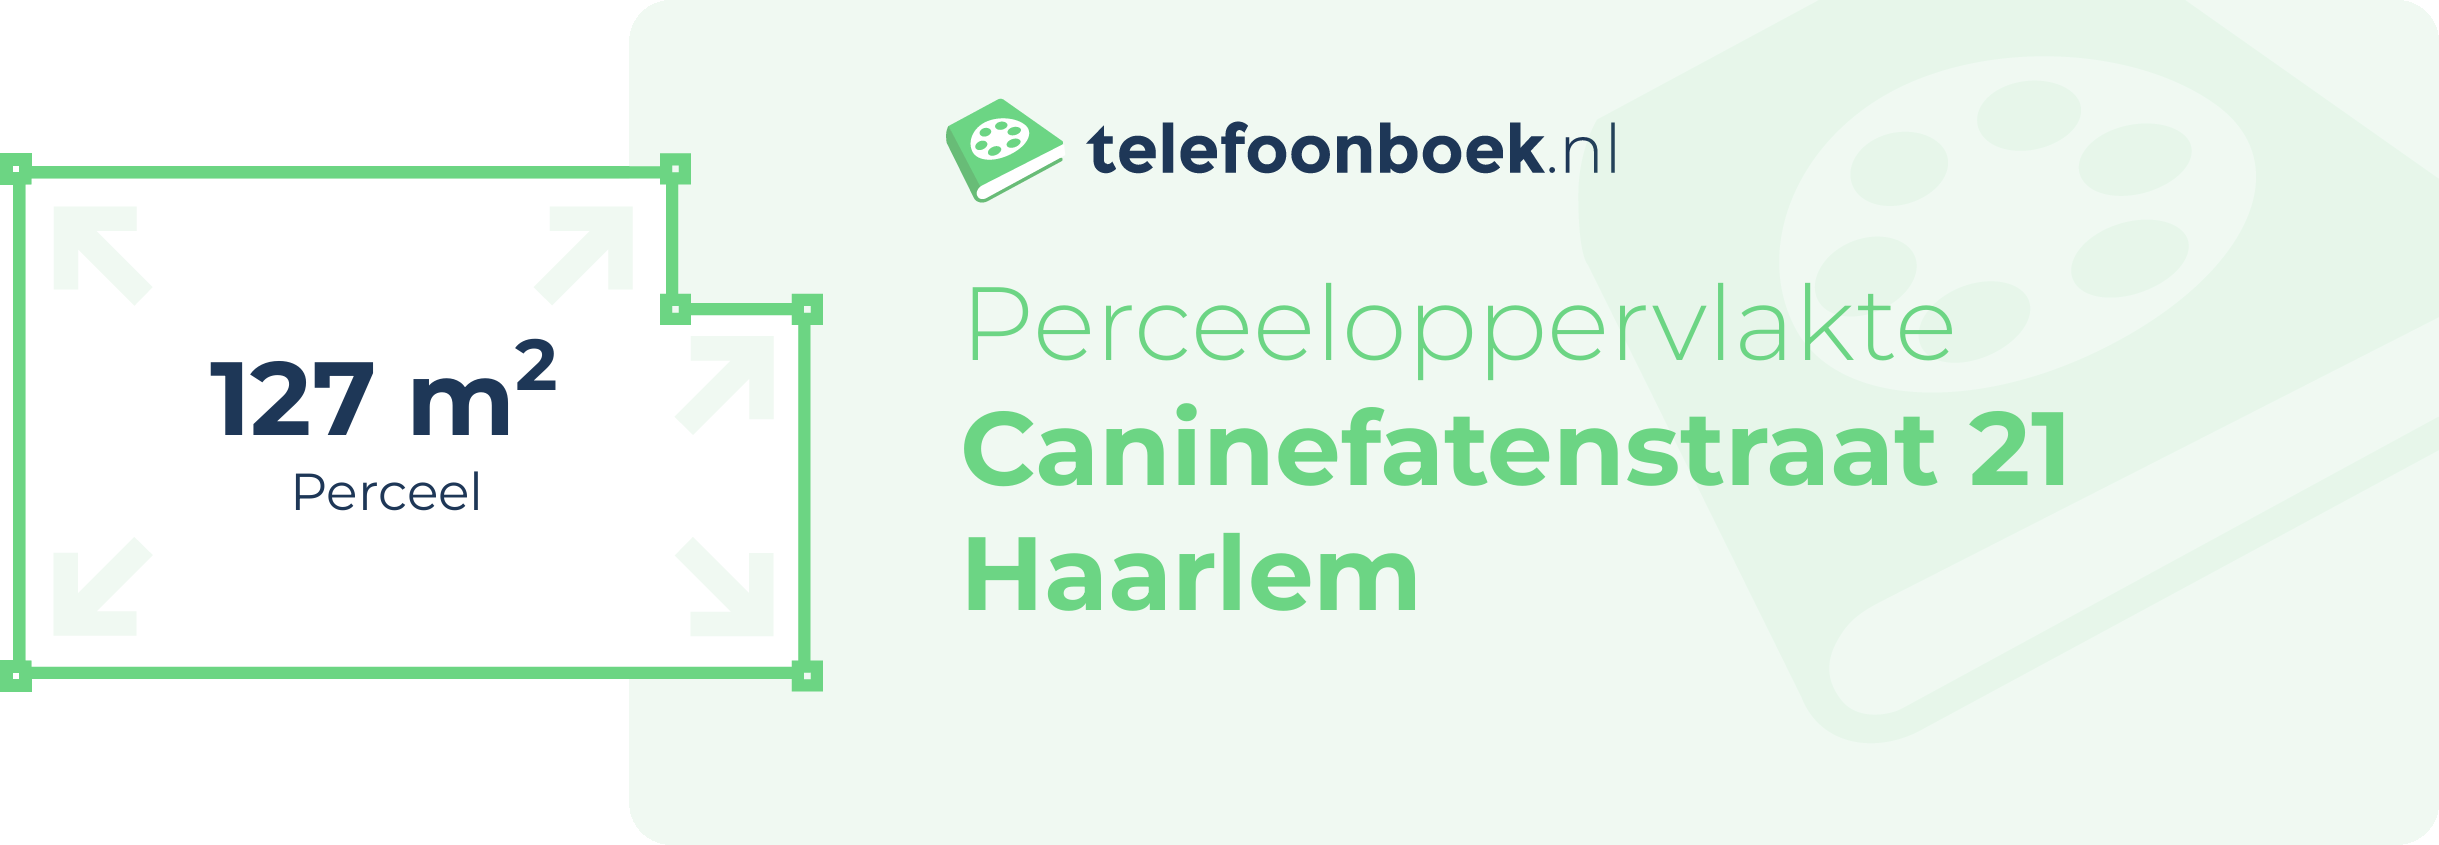 Perceeloppervlakte Caninefatenstraat 21 Haarlem